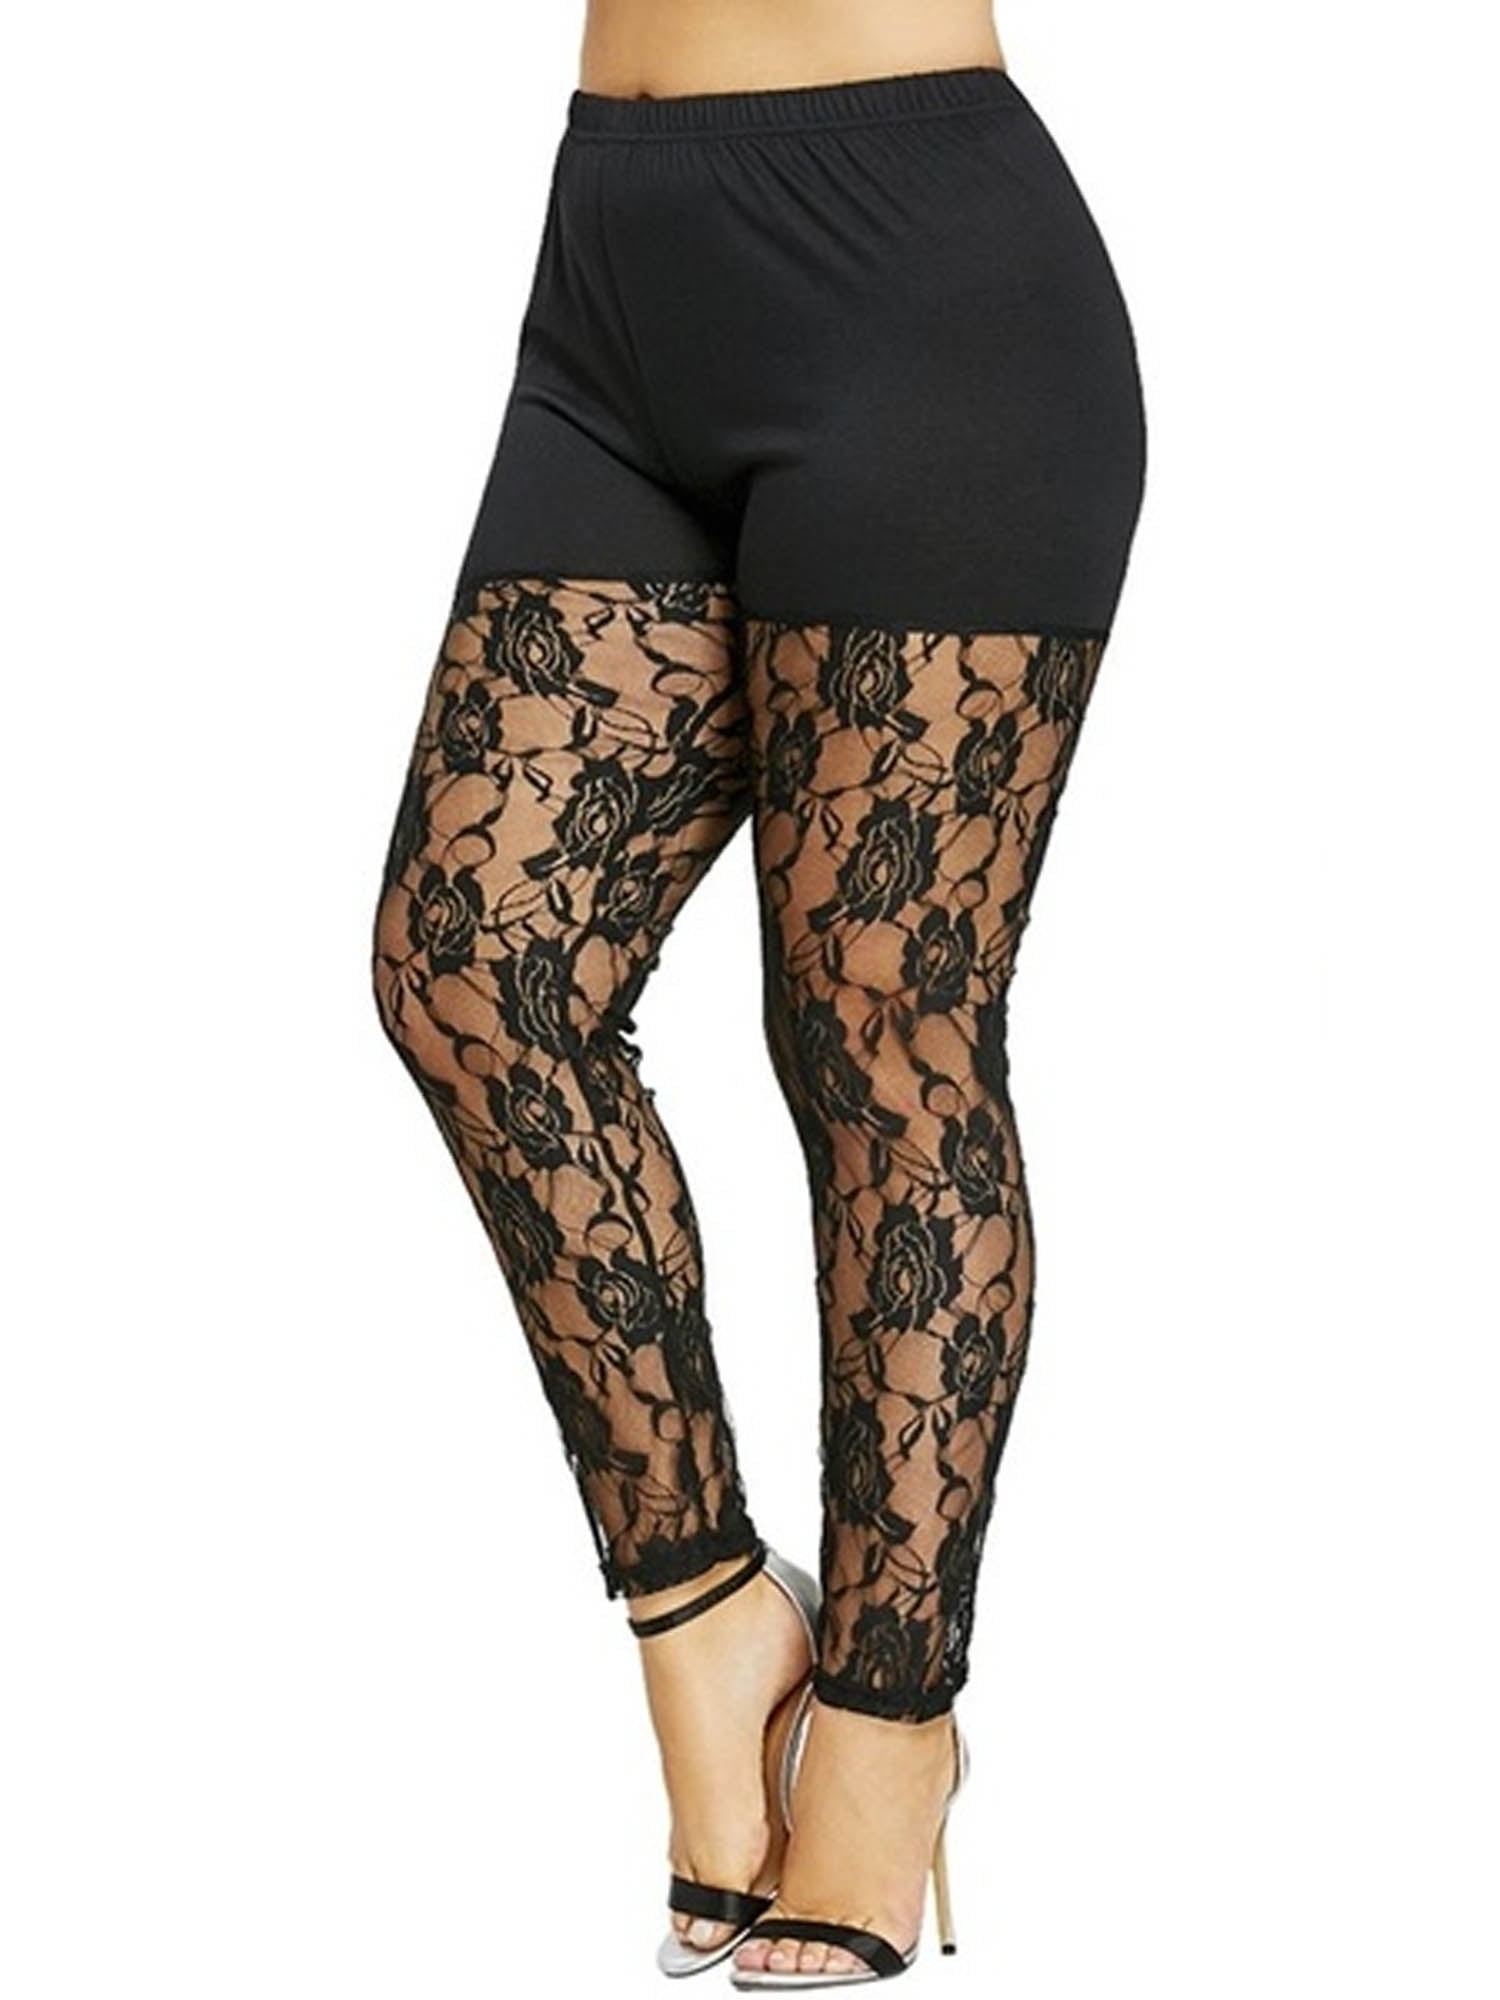 wybzd Women's Lace Hollow Leggings Floral Plus Size Stretch Pants Lace  Insert Sheer Leggings Black XL 